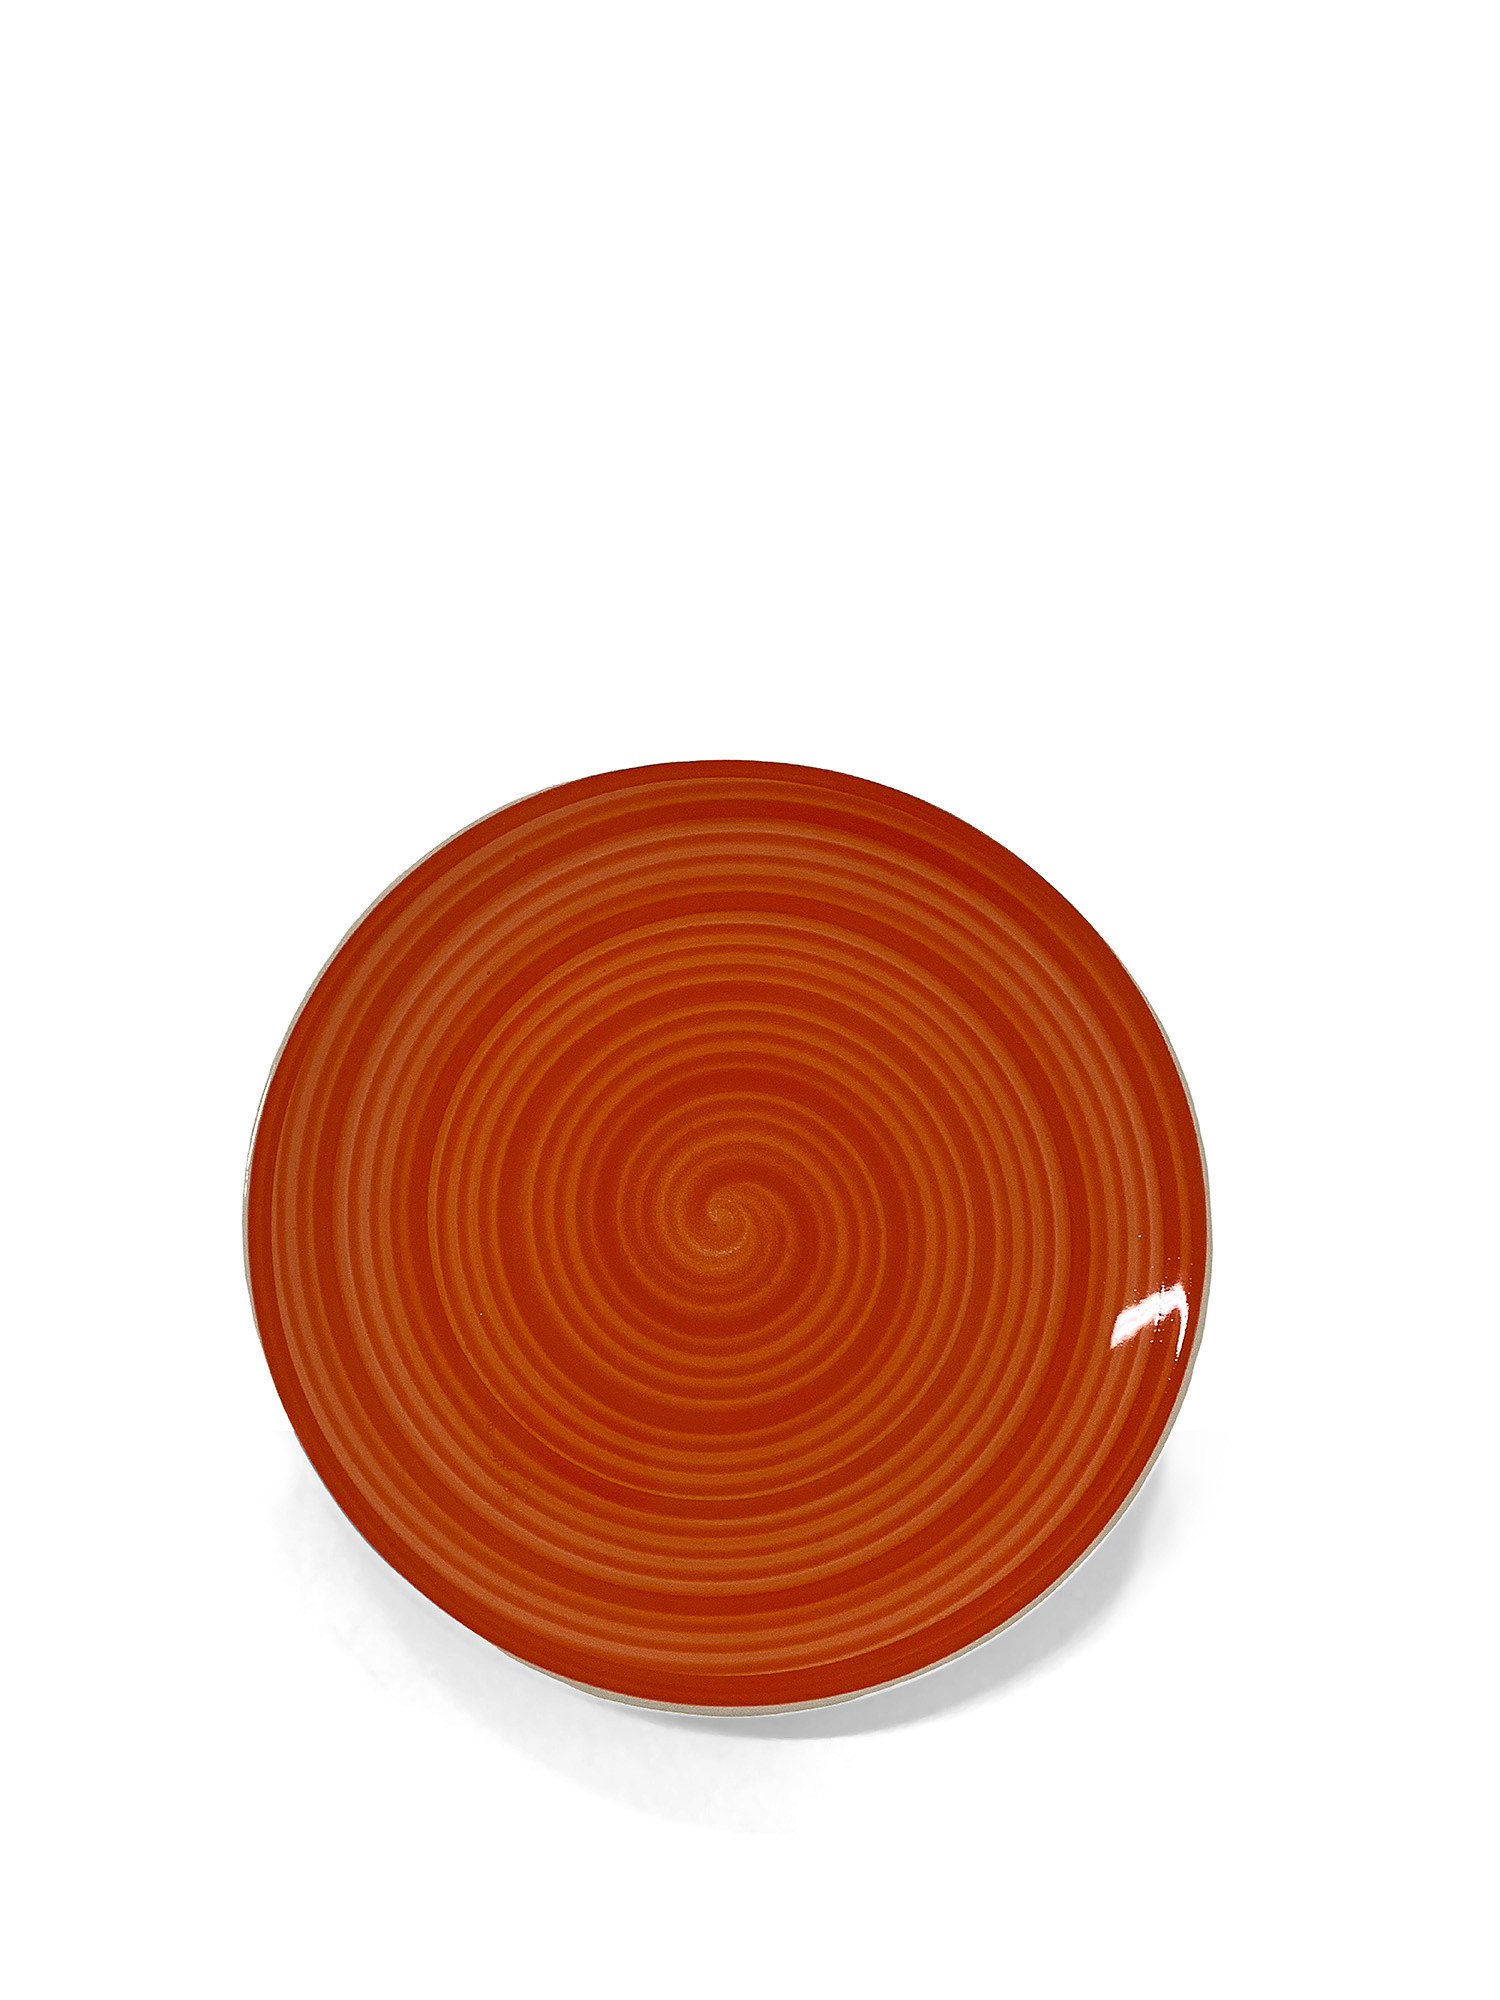 Piatto frutta ceramica dipinta a mano Spirale, Arancione, large image number 0